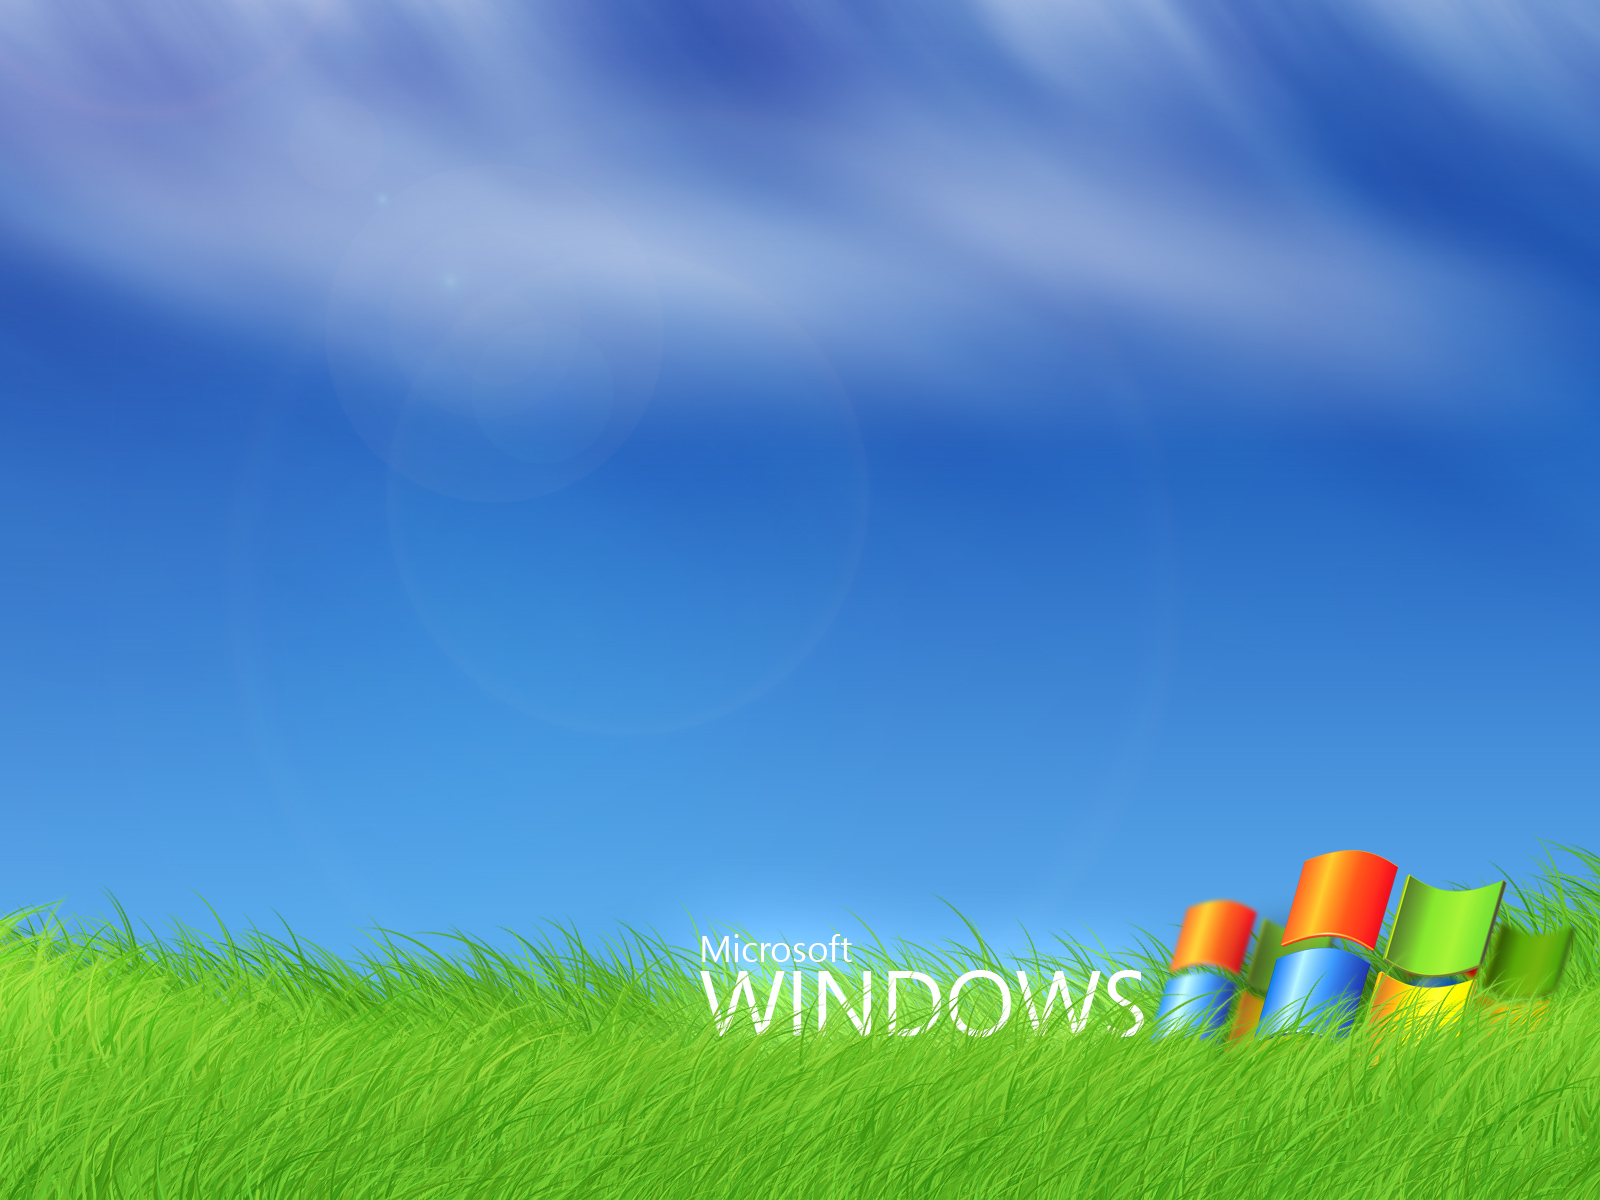 windows wallpaper free download,natural landscape,sky,grassland,grass,meadow